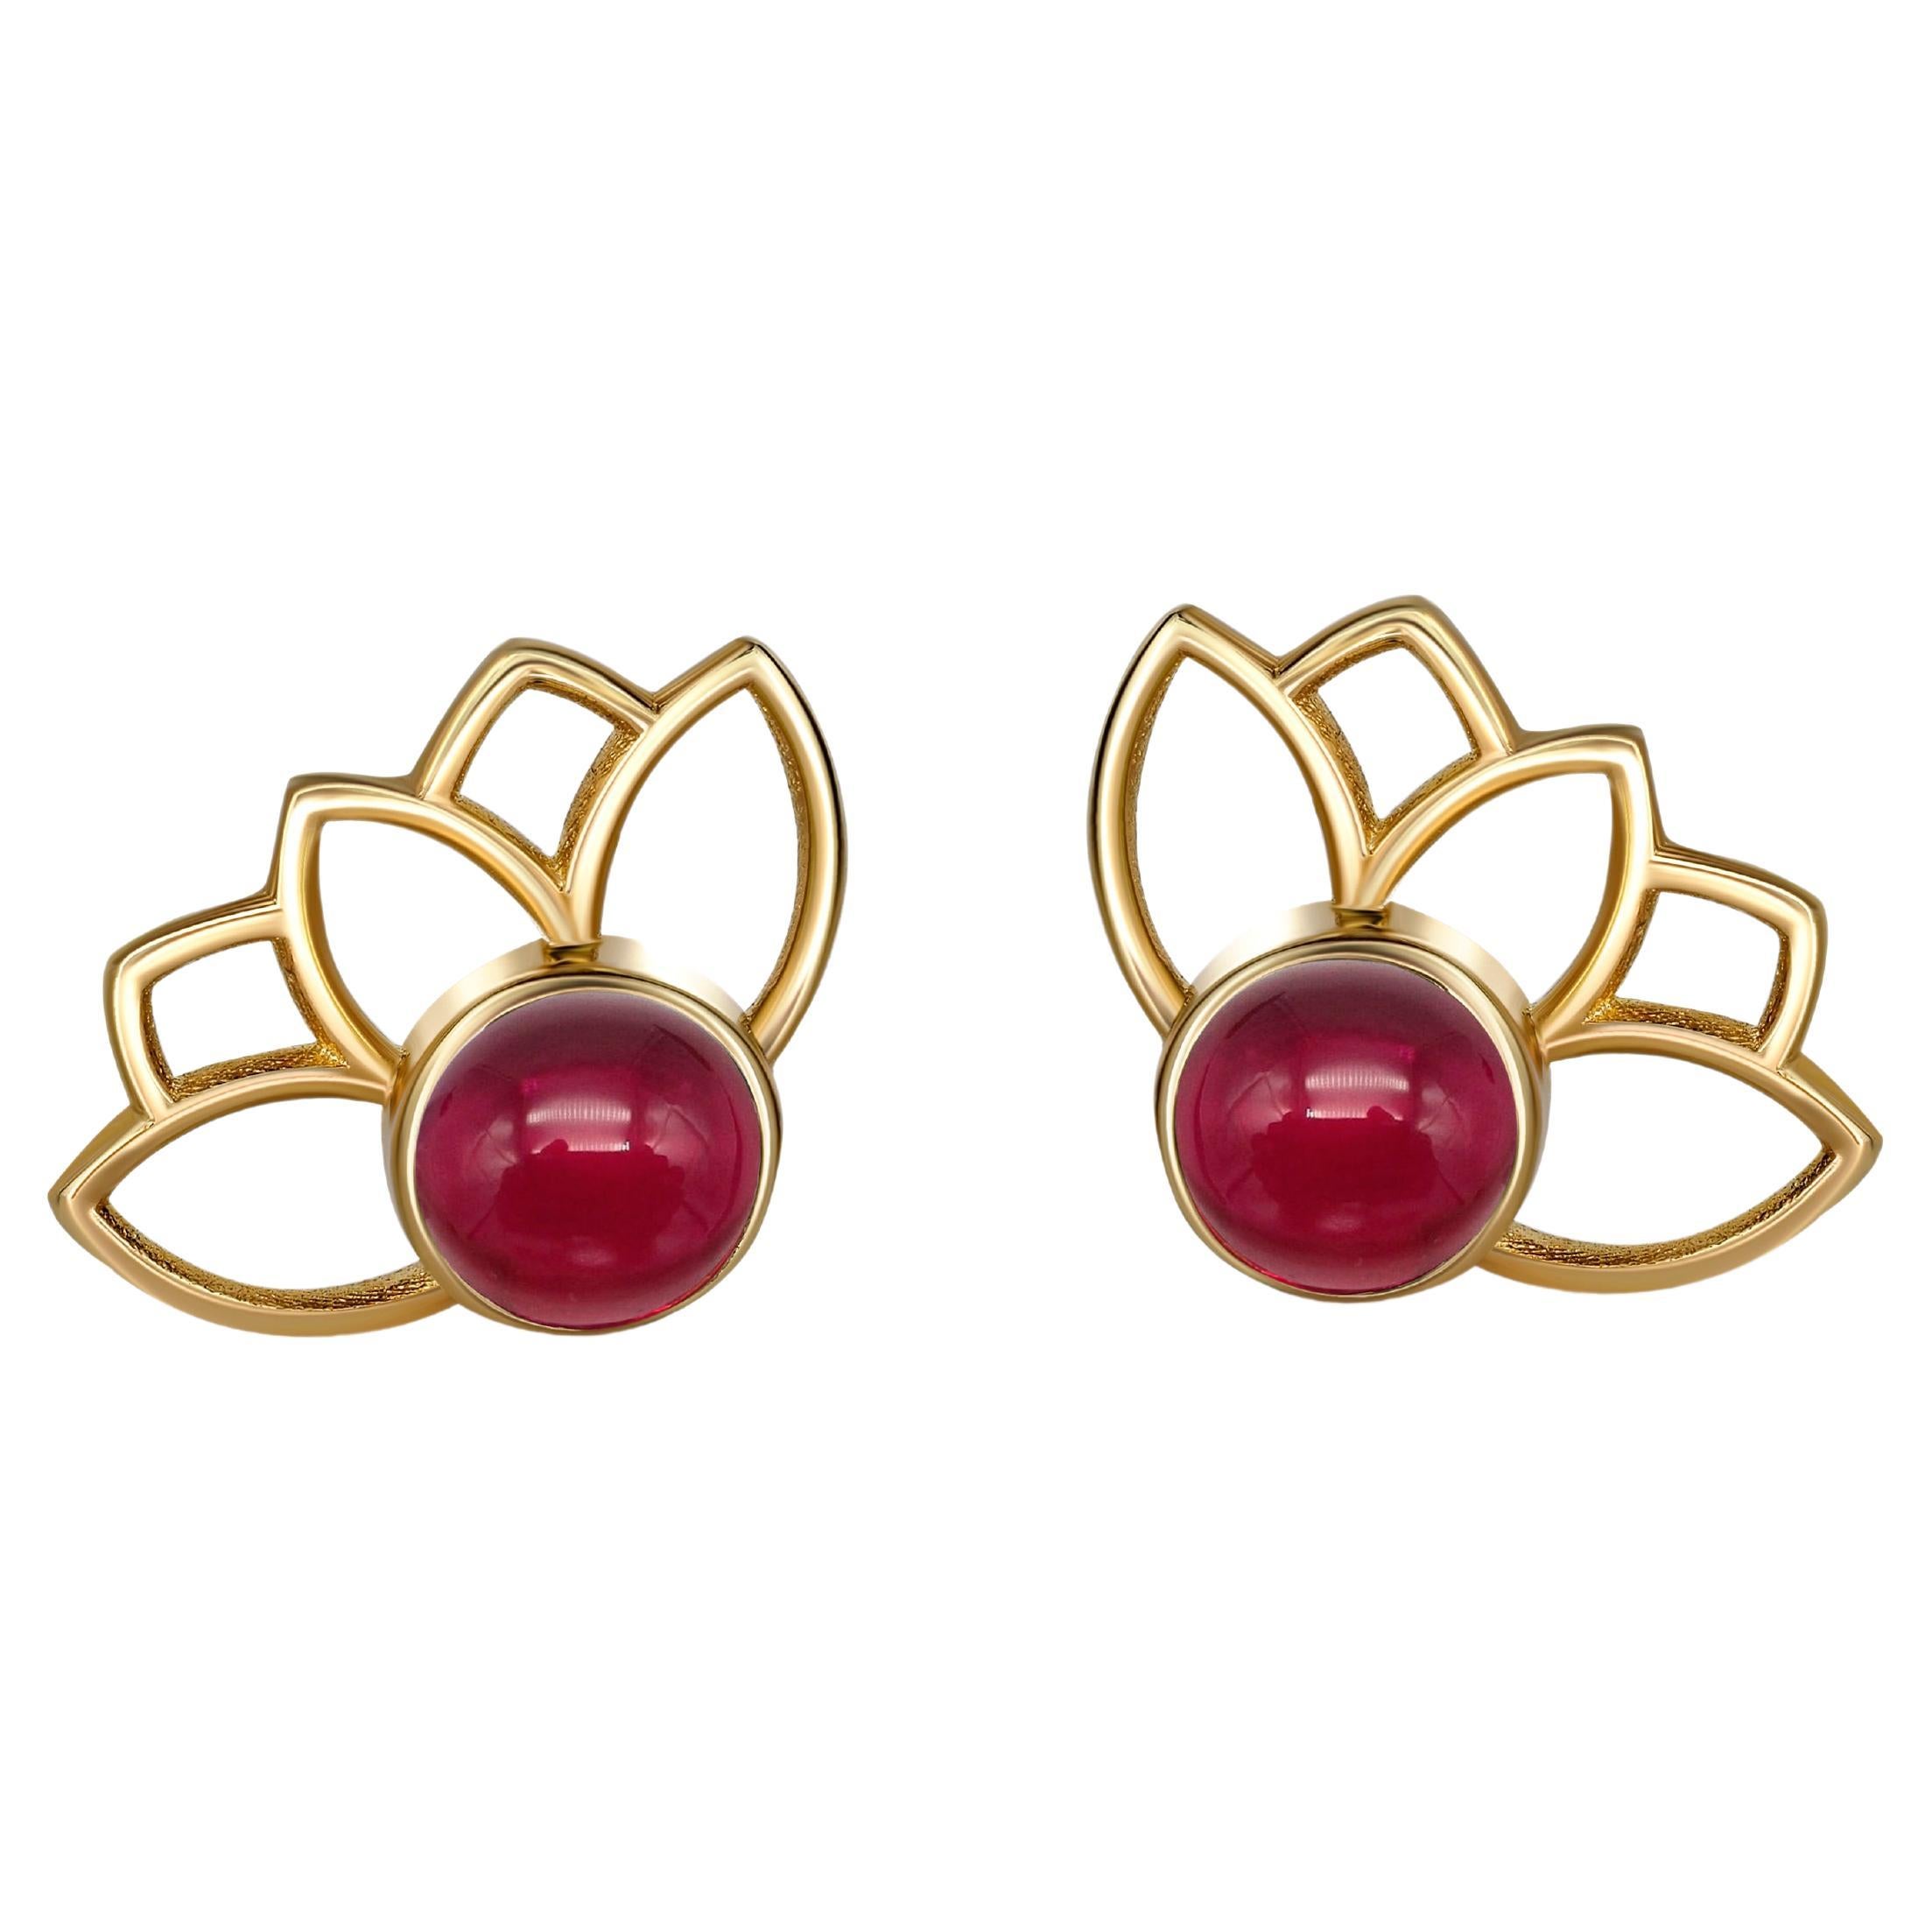 Lotus earrings studs with rubies in 14k gold. 